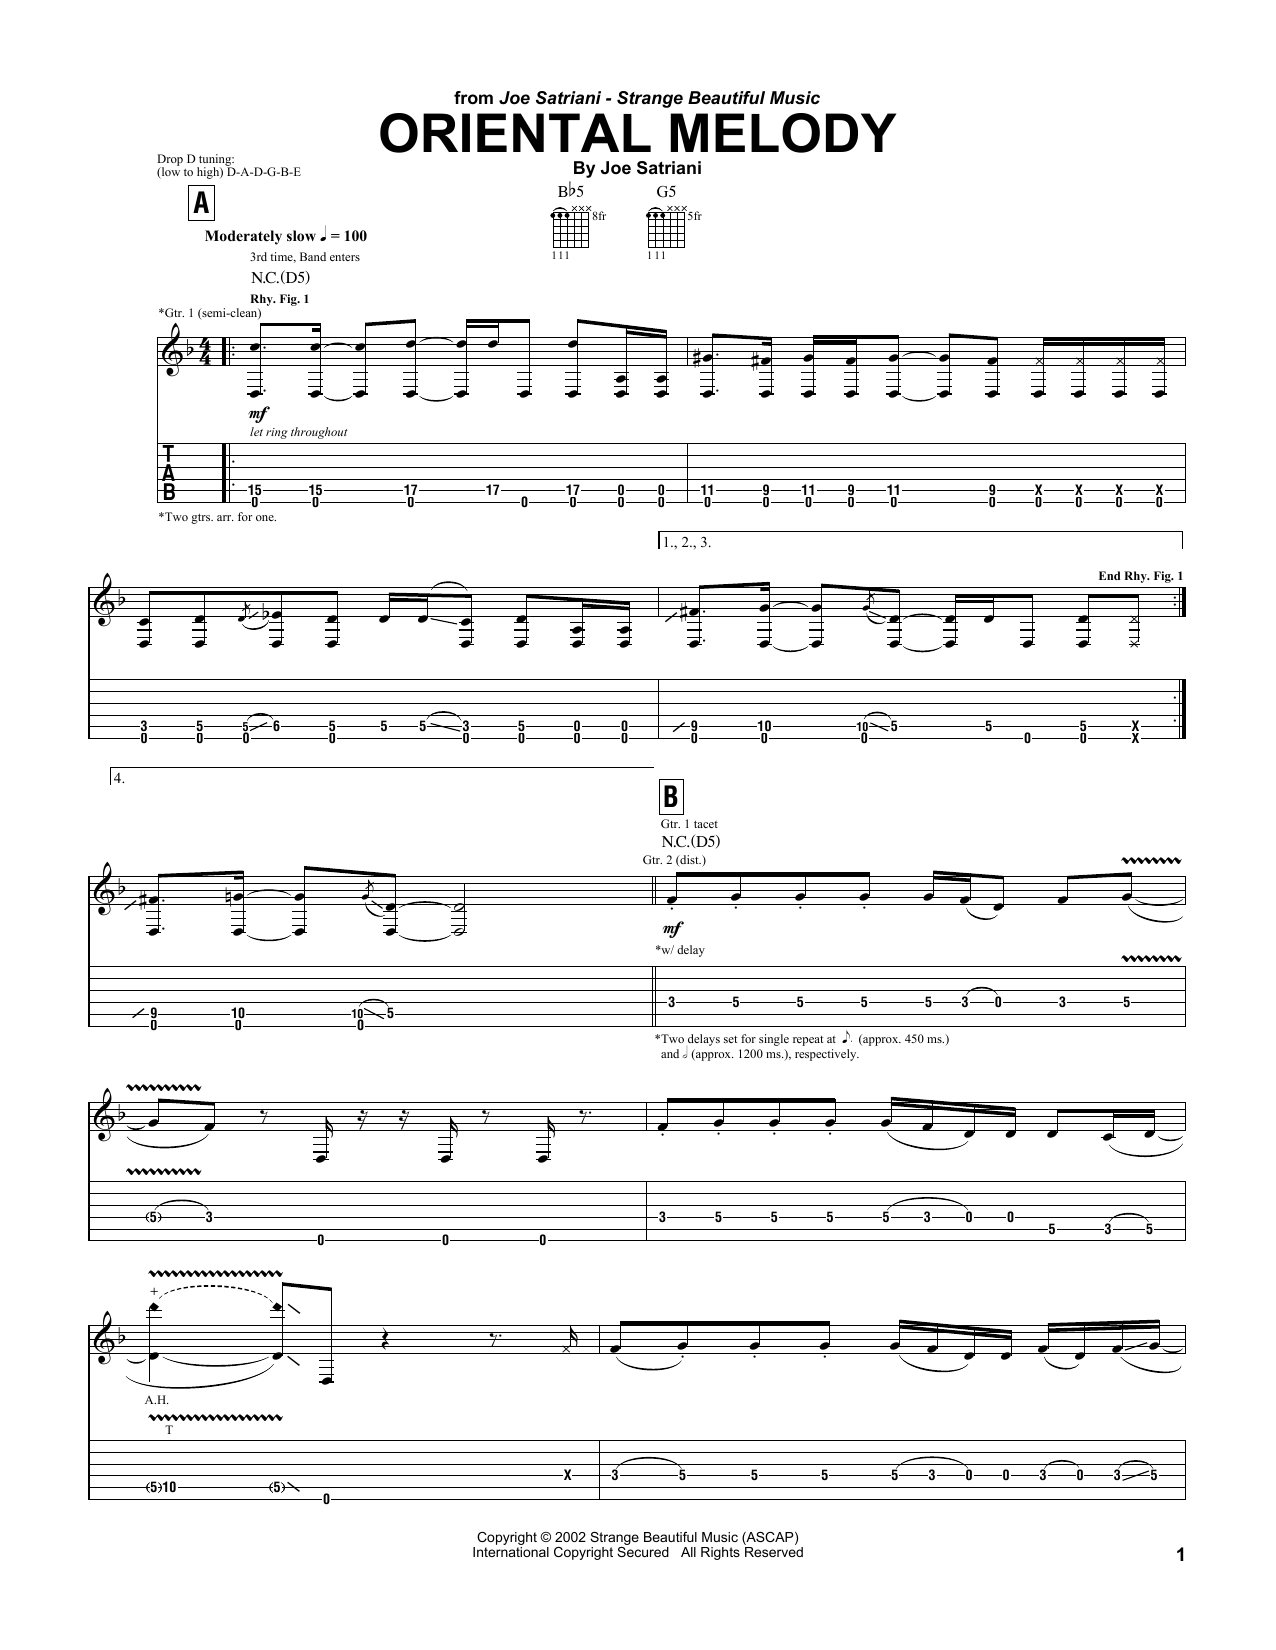 Joe Satriani Oriental Melody Sheet Music Notes & Chords for Guitar Tab - Download or Print PDF